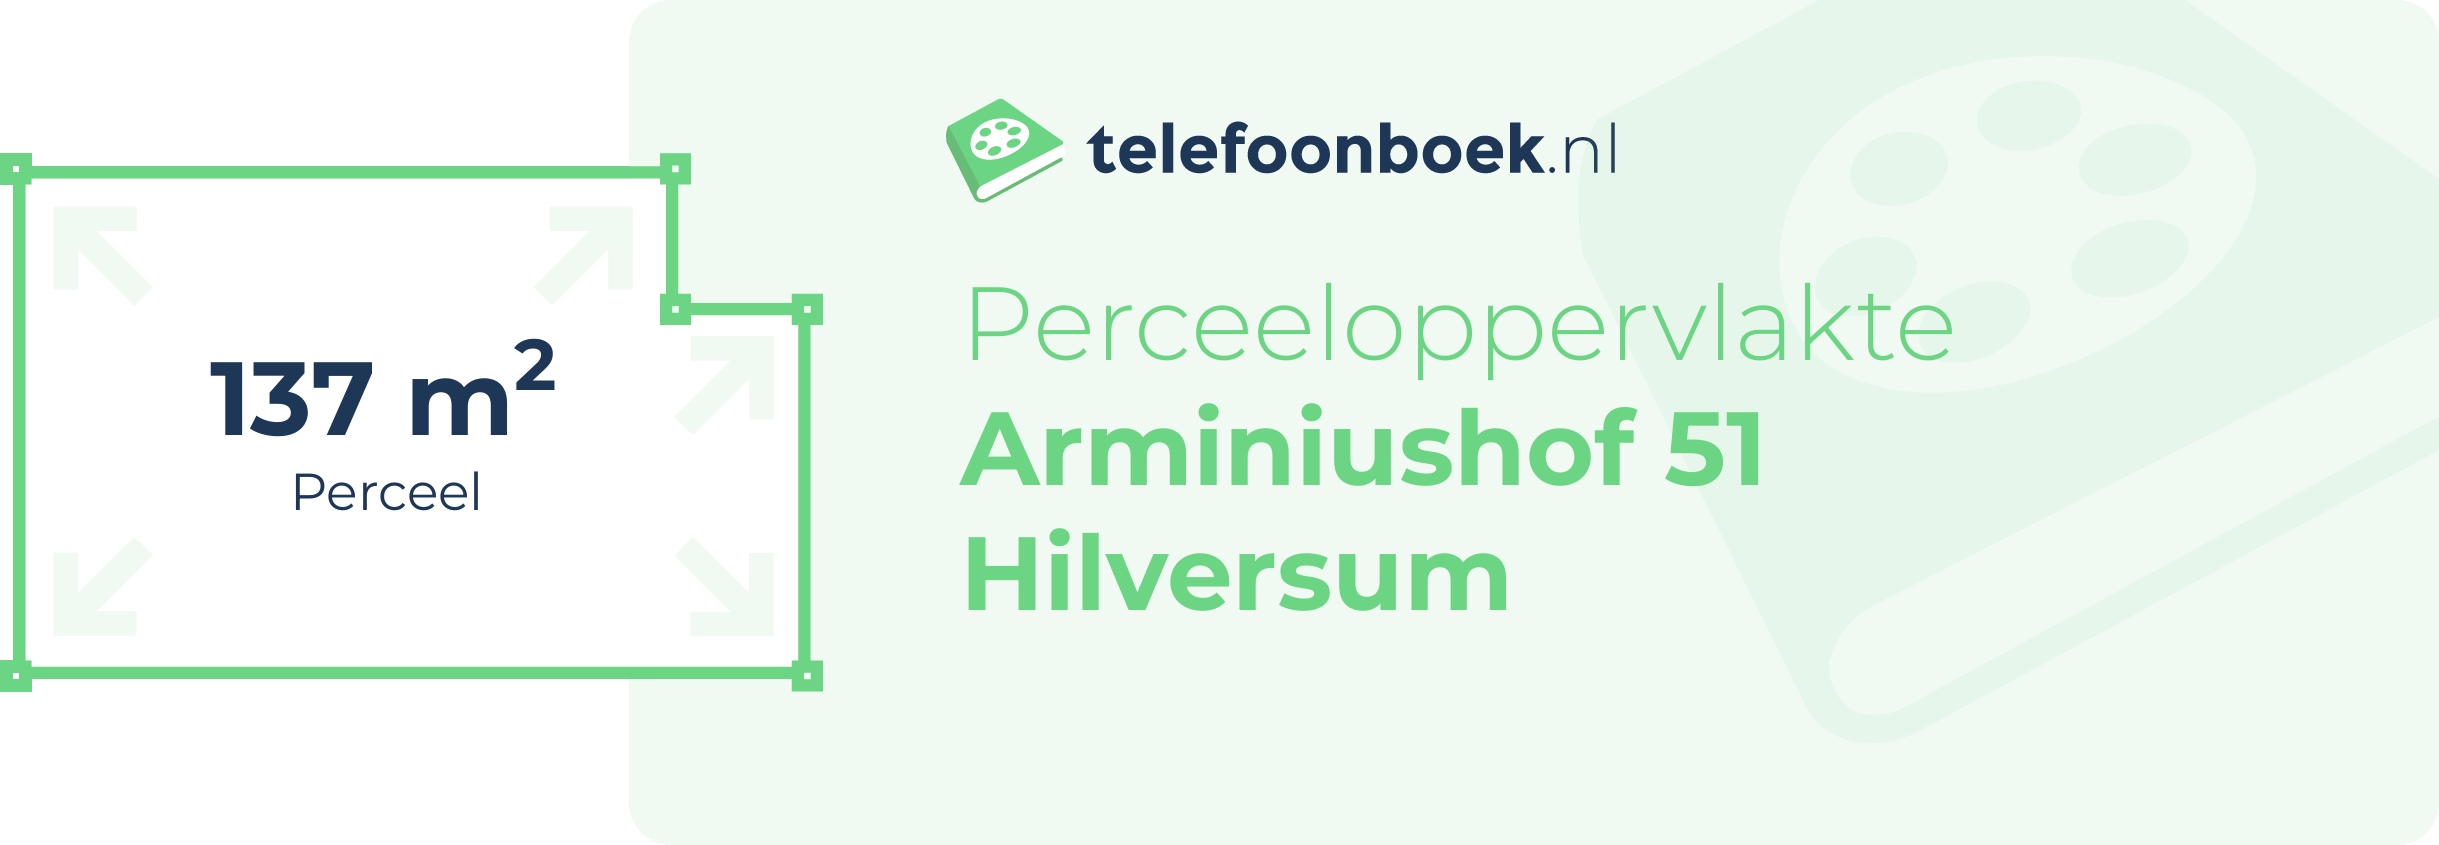 Perceeloppervlakte Arminiushof 51 Hilversum